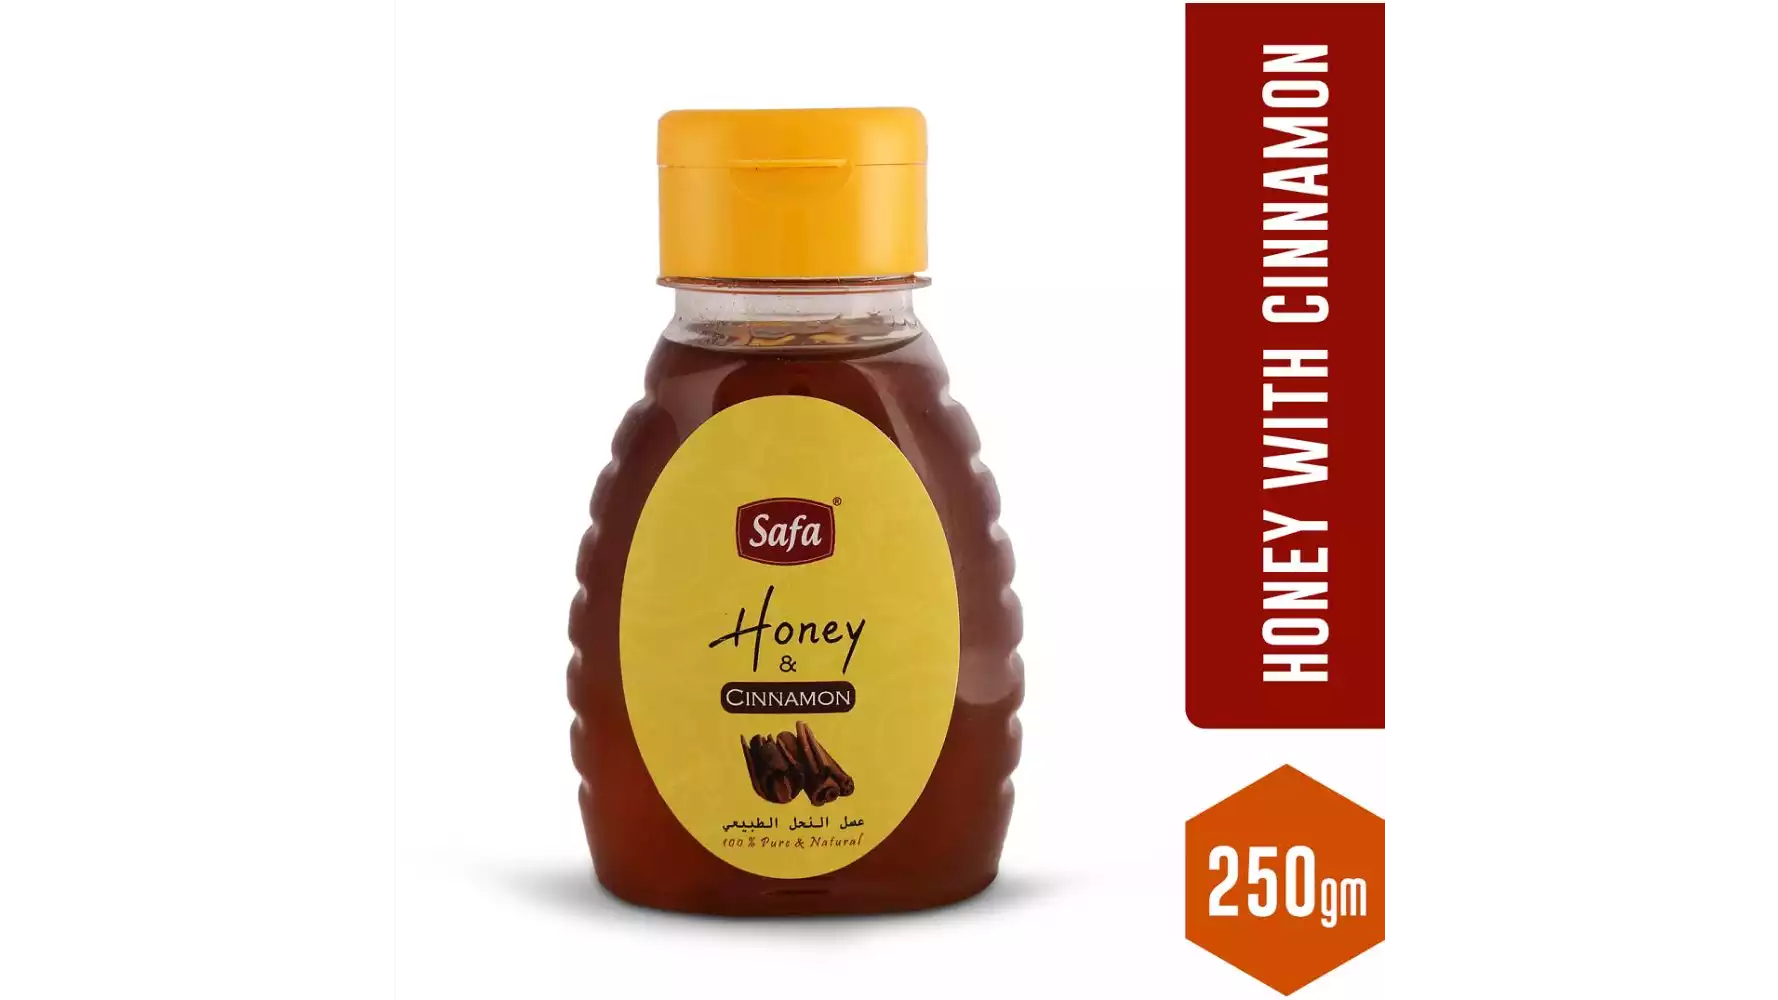 Safa Honey & Cinnamon (250g)